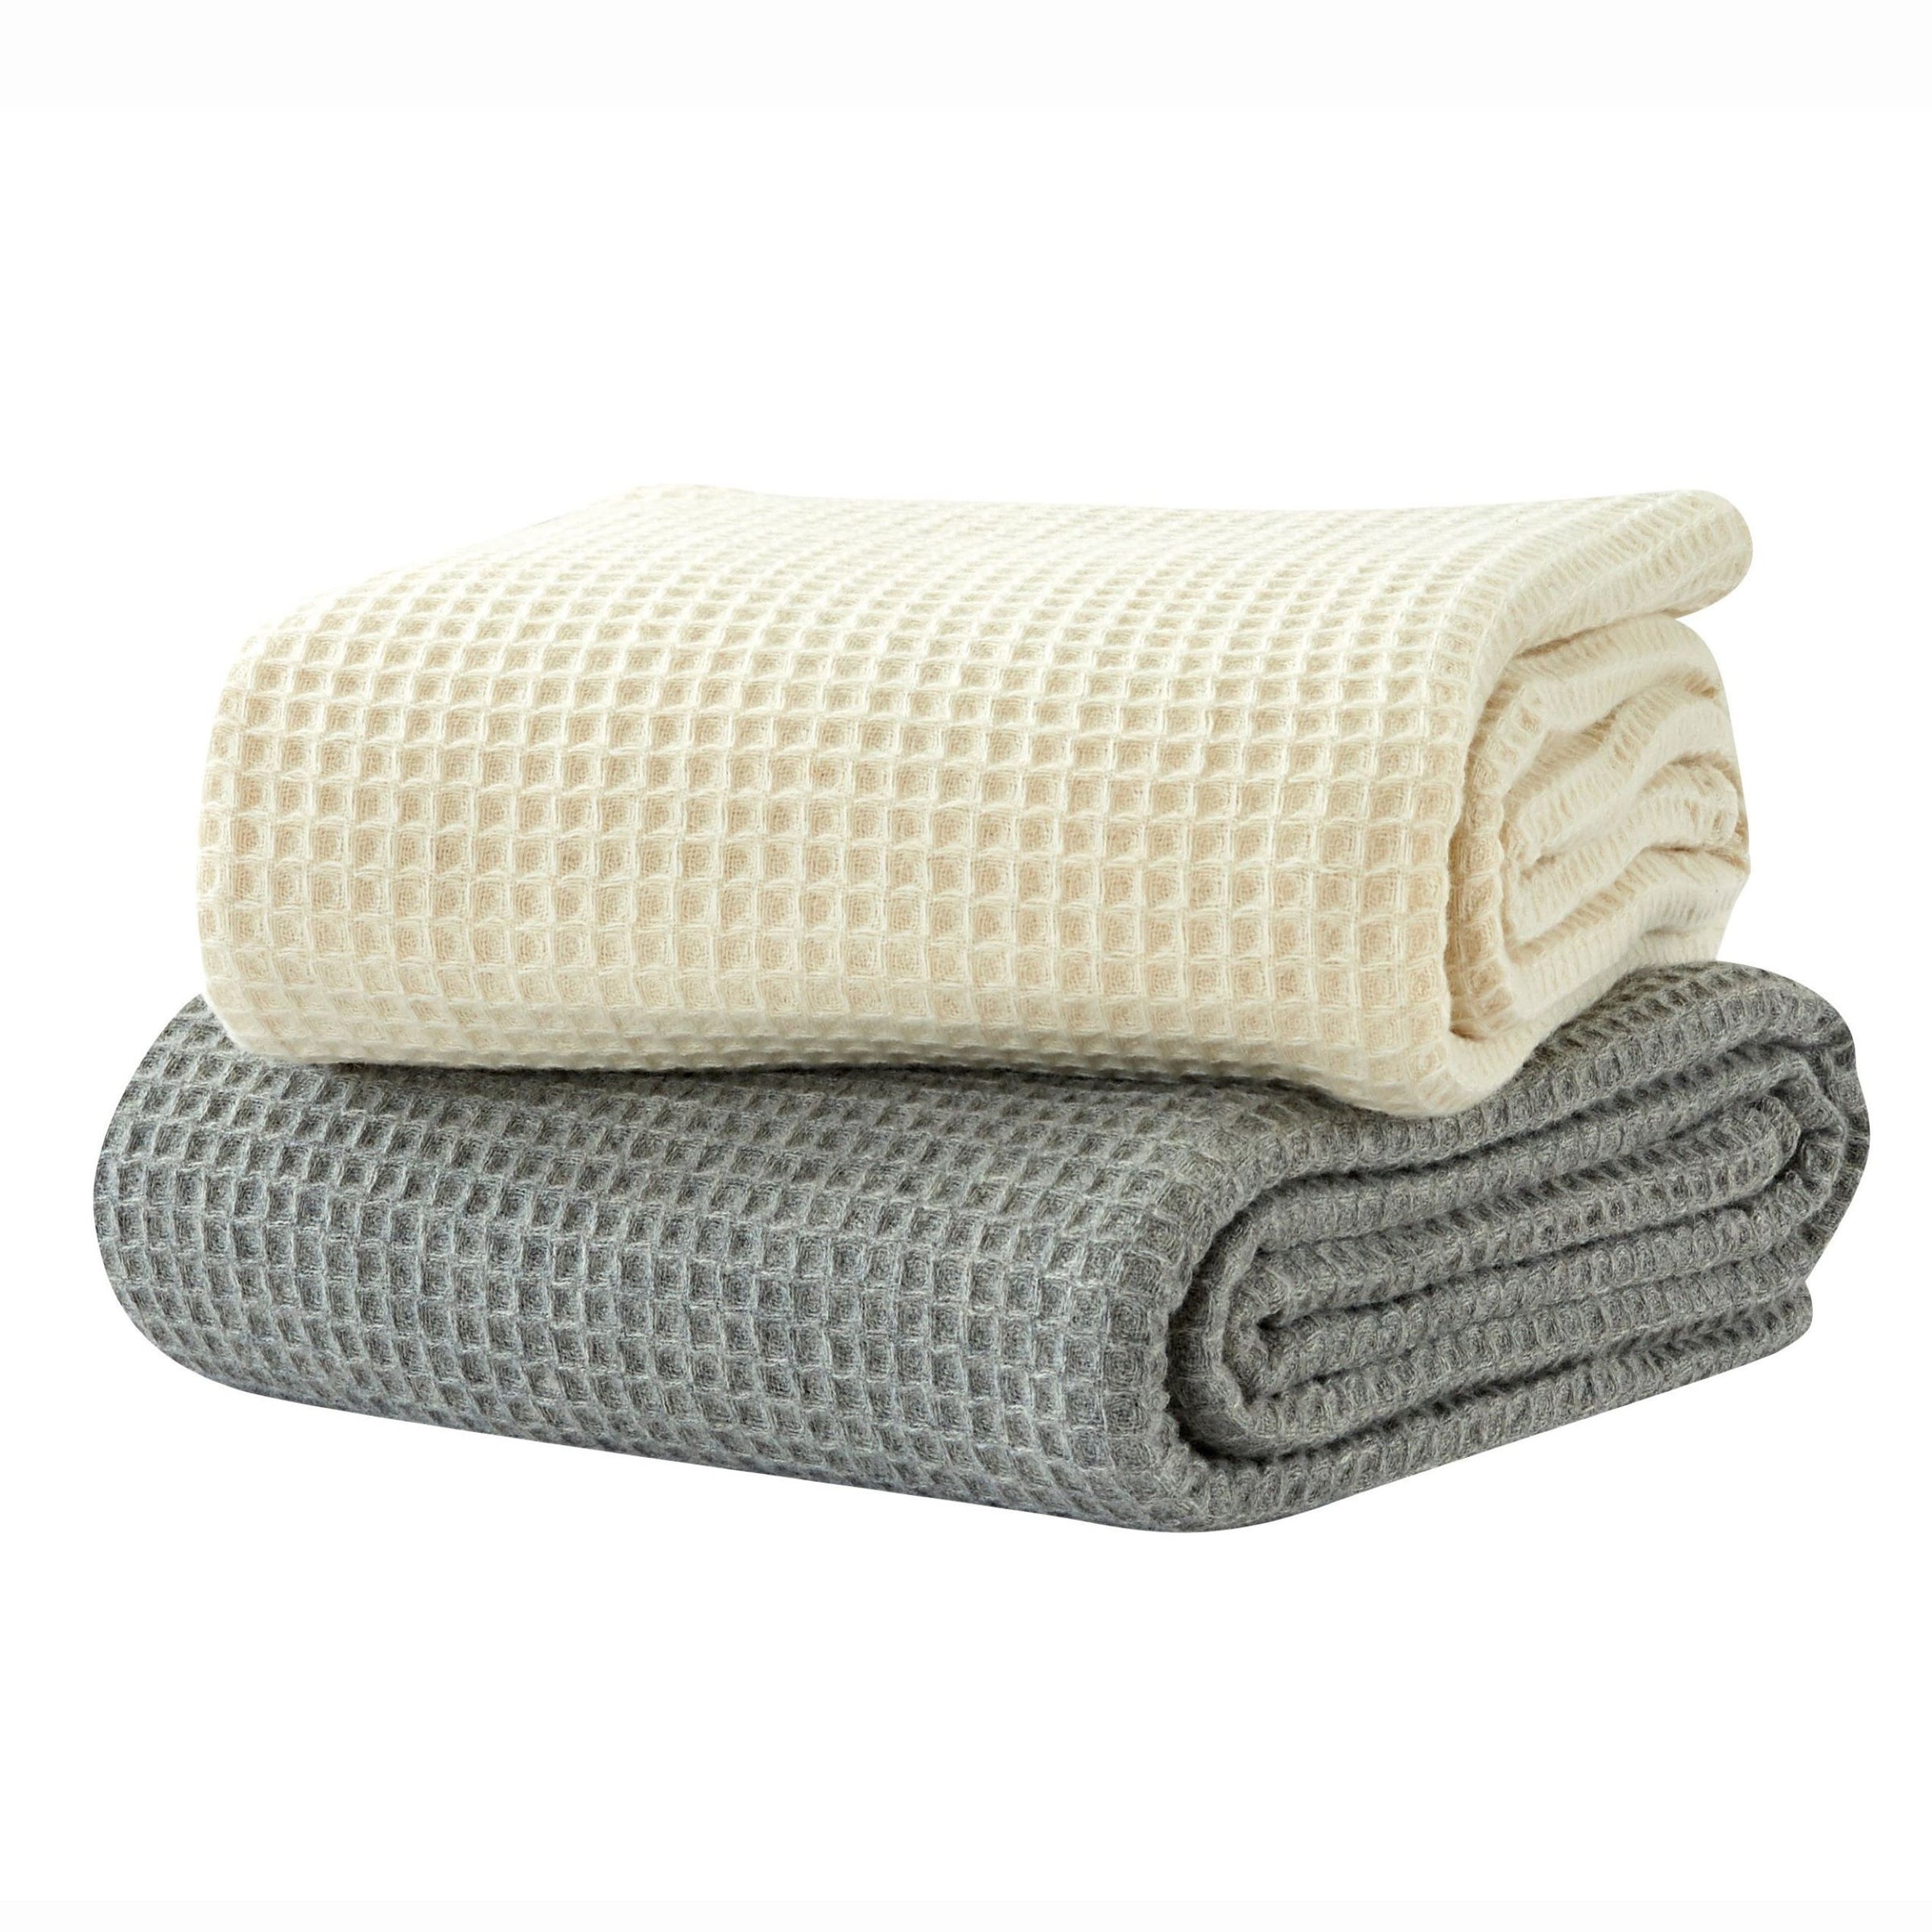 Melange Home 100% Wool Waffle Weave Blanket, King - Ivory